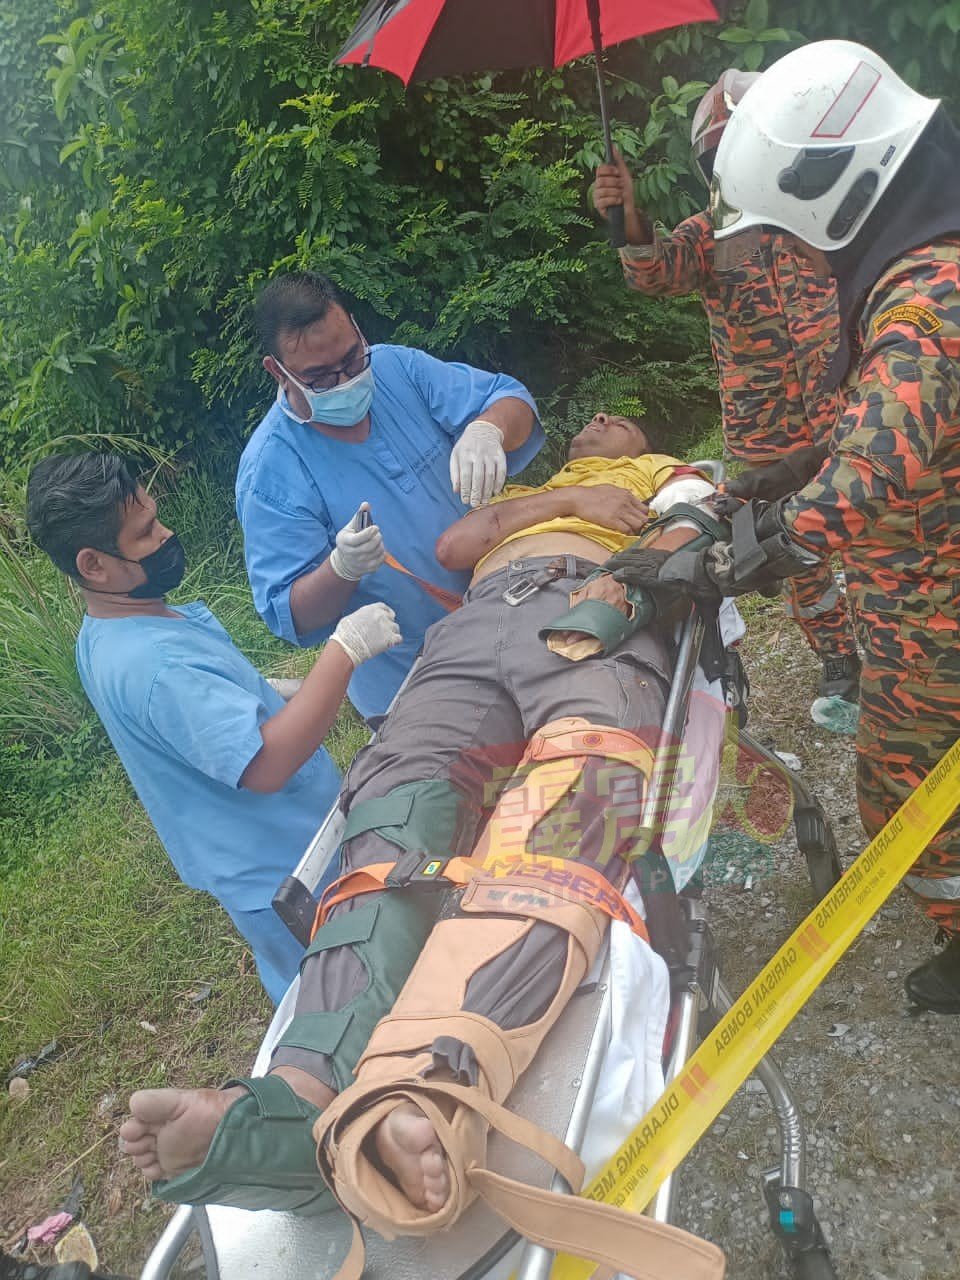 Viva轿车的巫裔男司机蒙受重伤，交由救护车送往医院接受治疗。